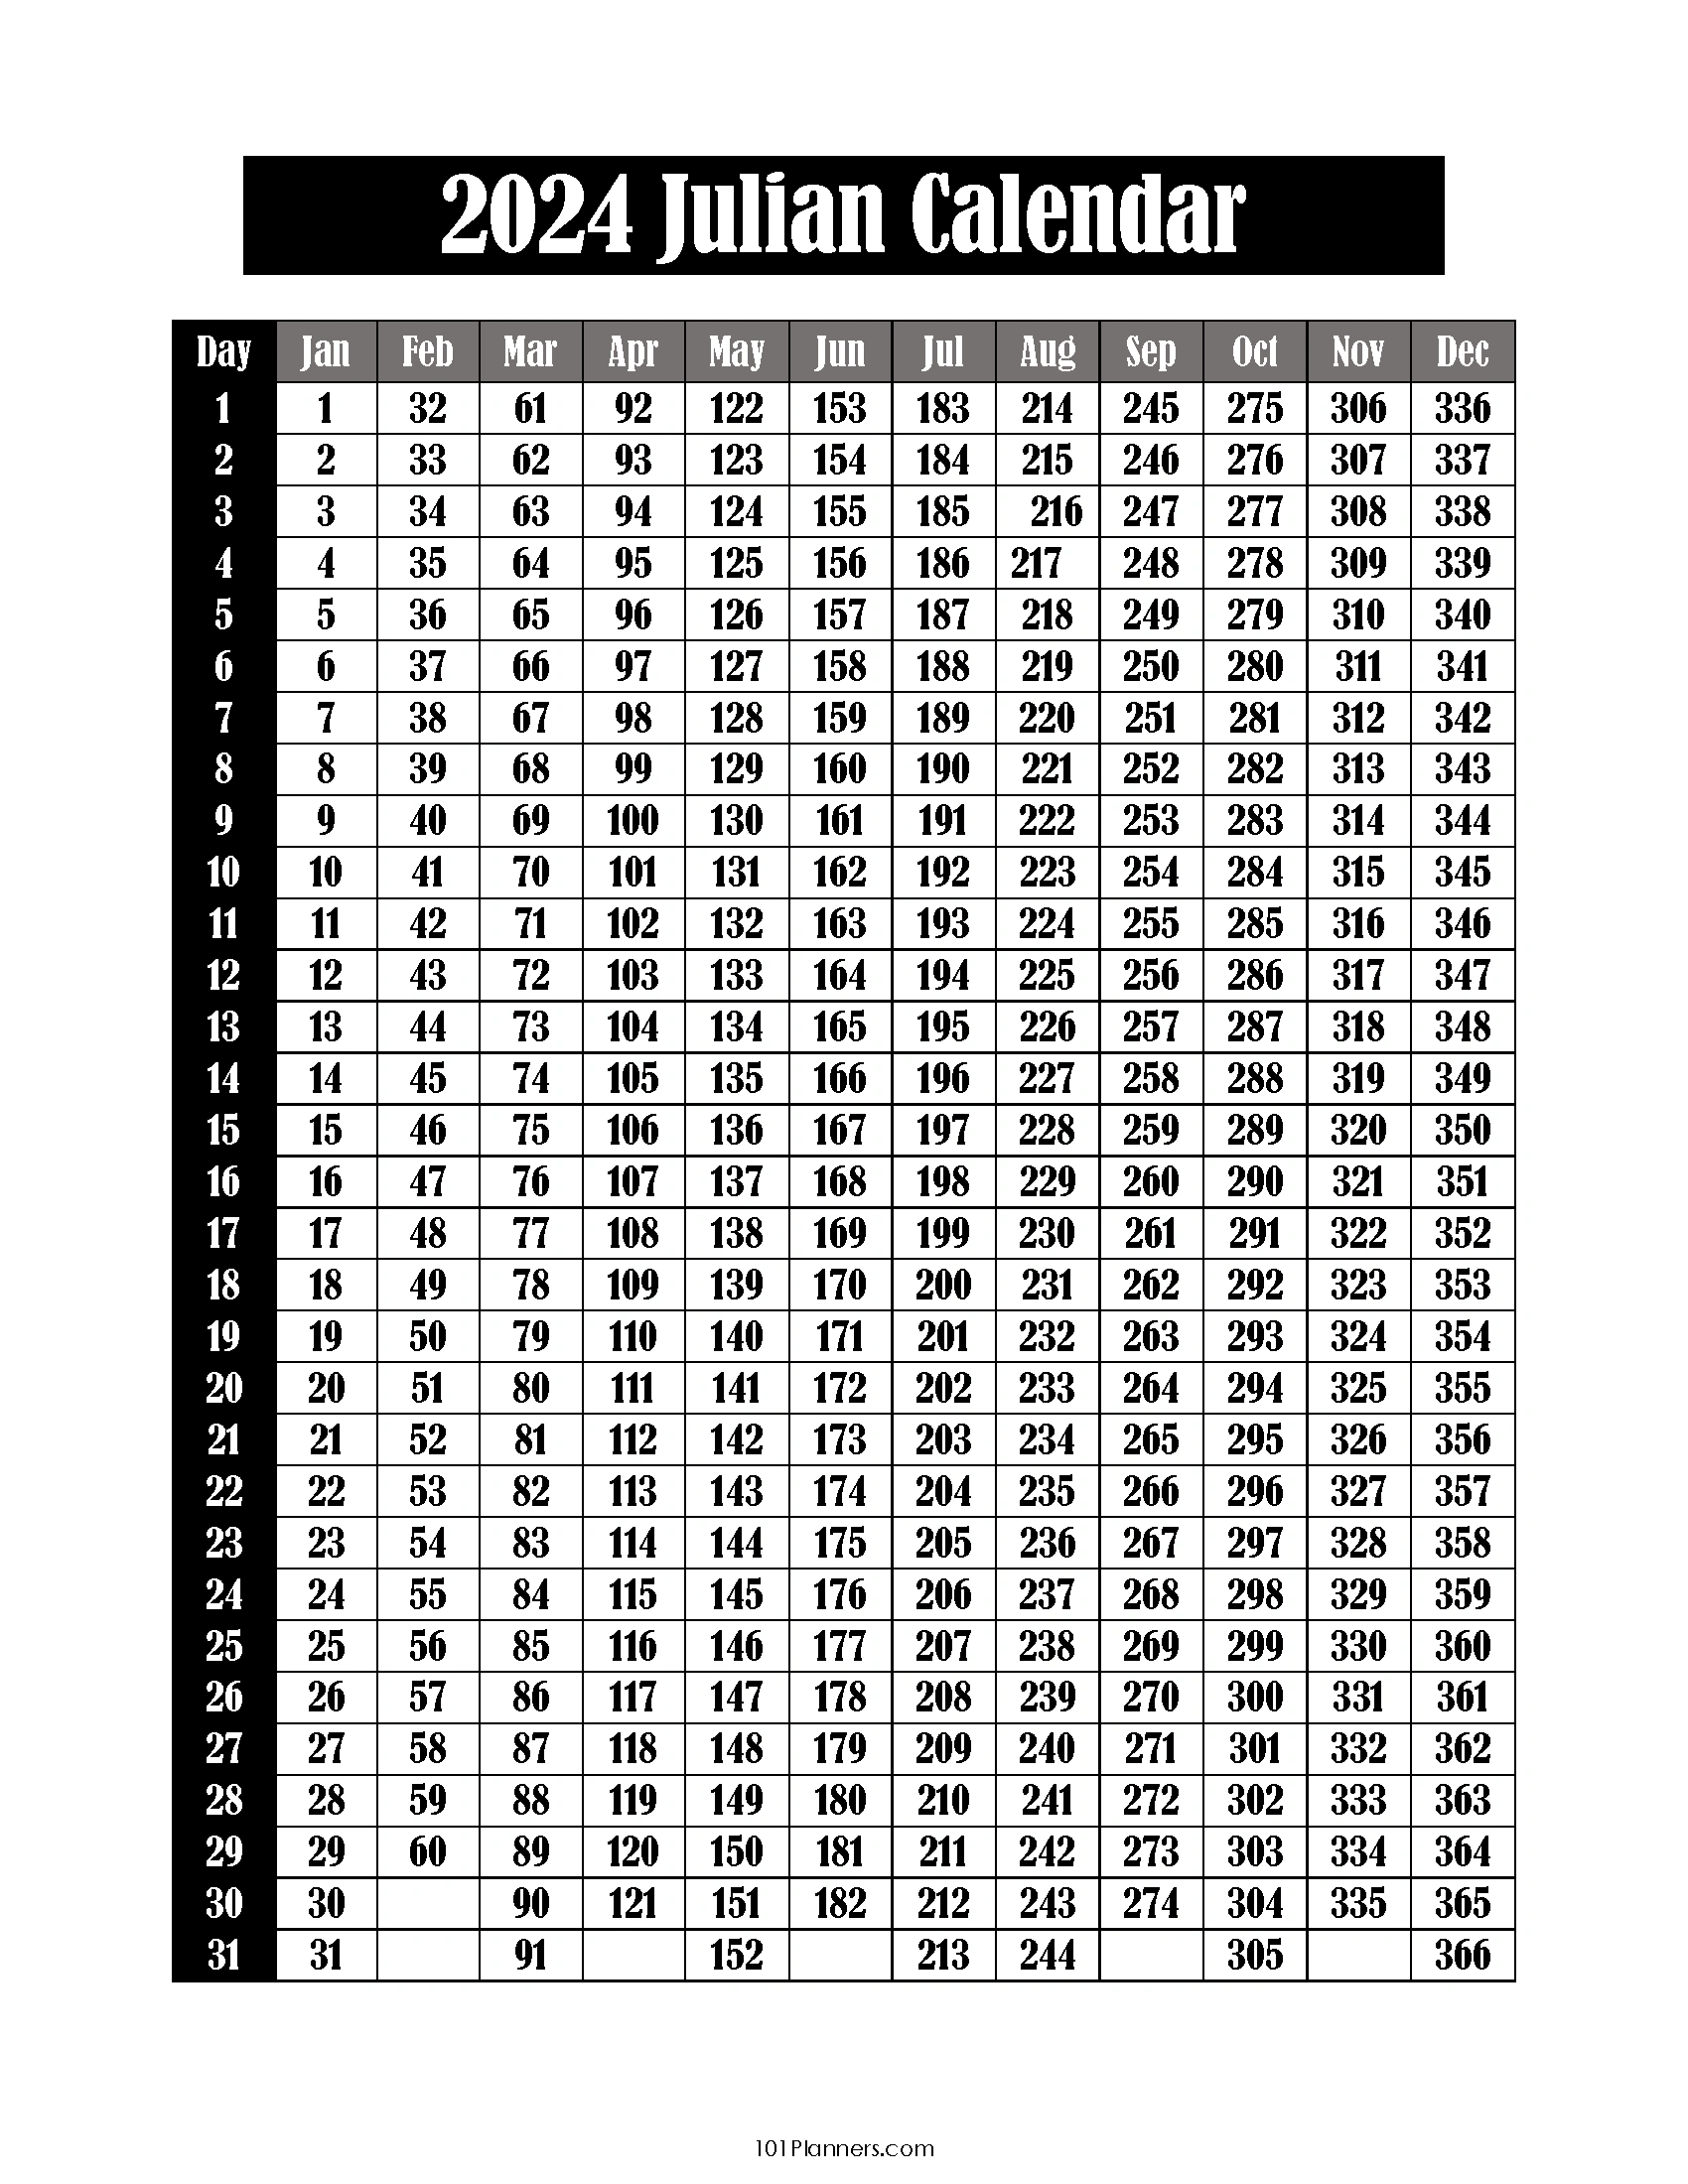 Free Printable Julian Calendar 2024-2032 | Julian Date Today intended for Julian Date Calendar 2024